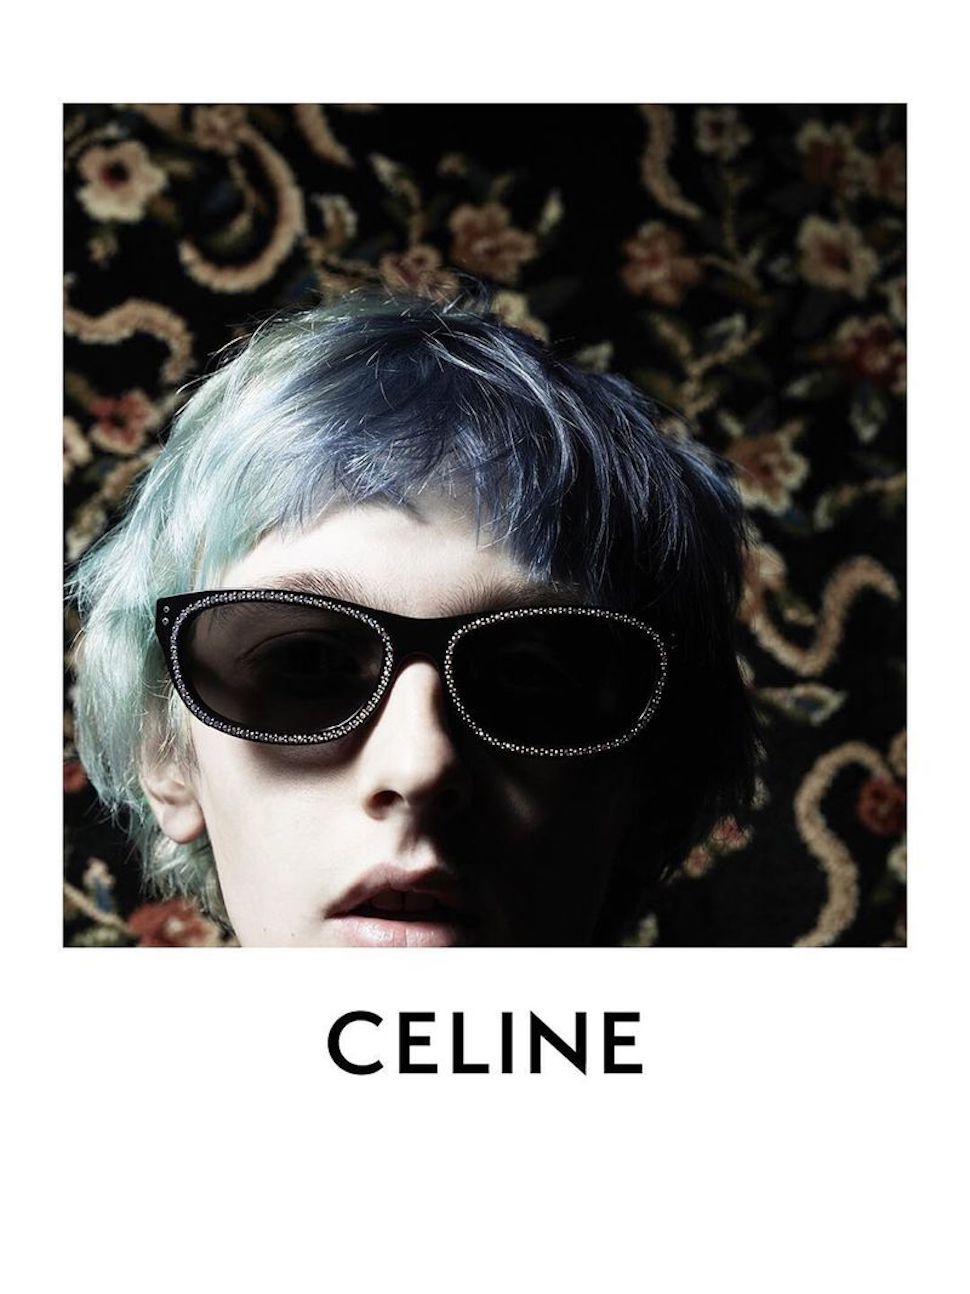 Celine SS19 Campaign by Hedi Slimane | Client Magazine